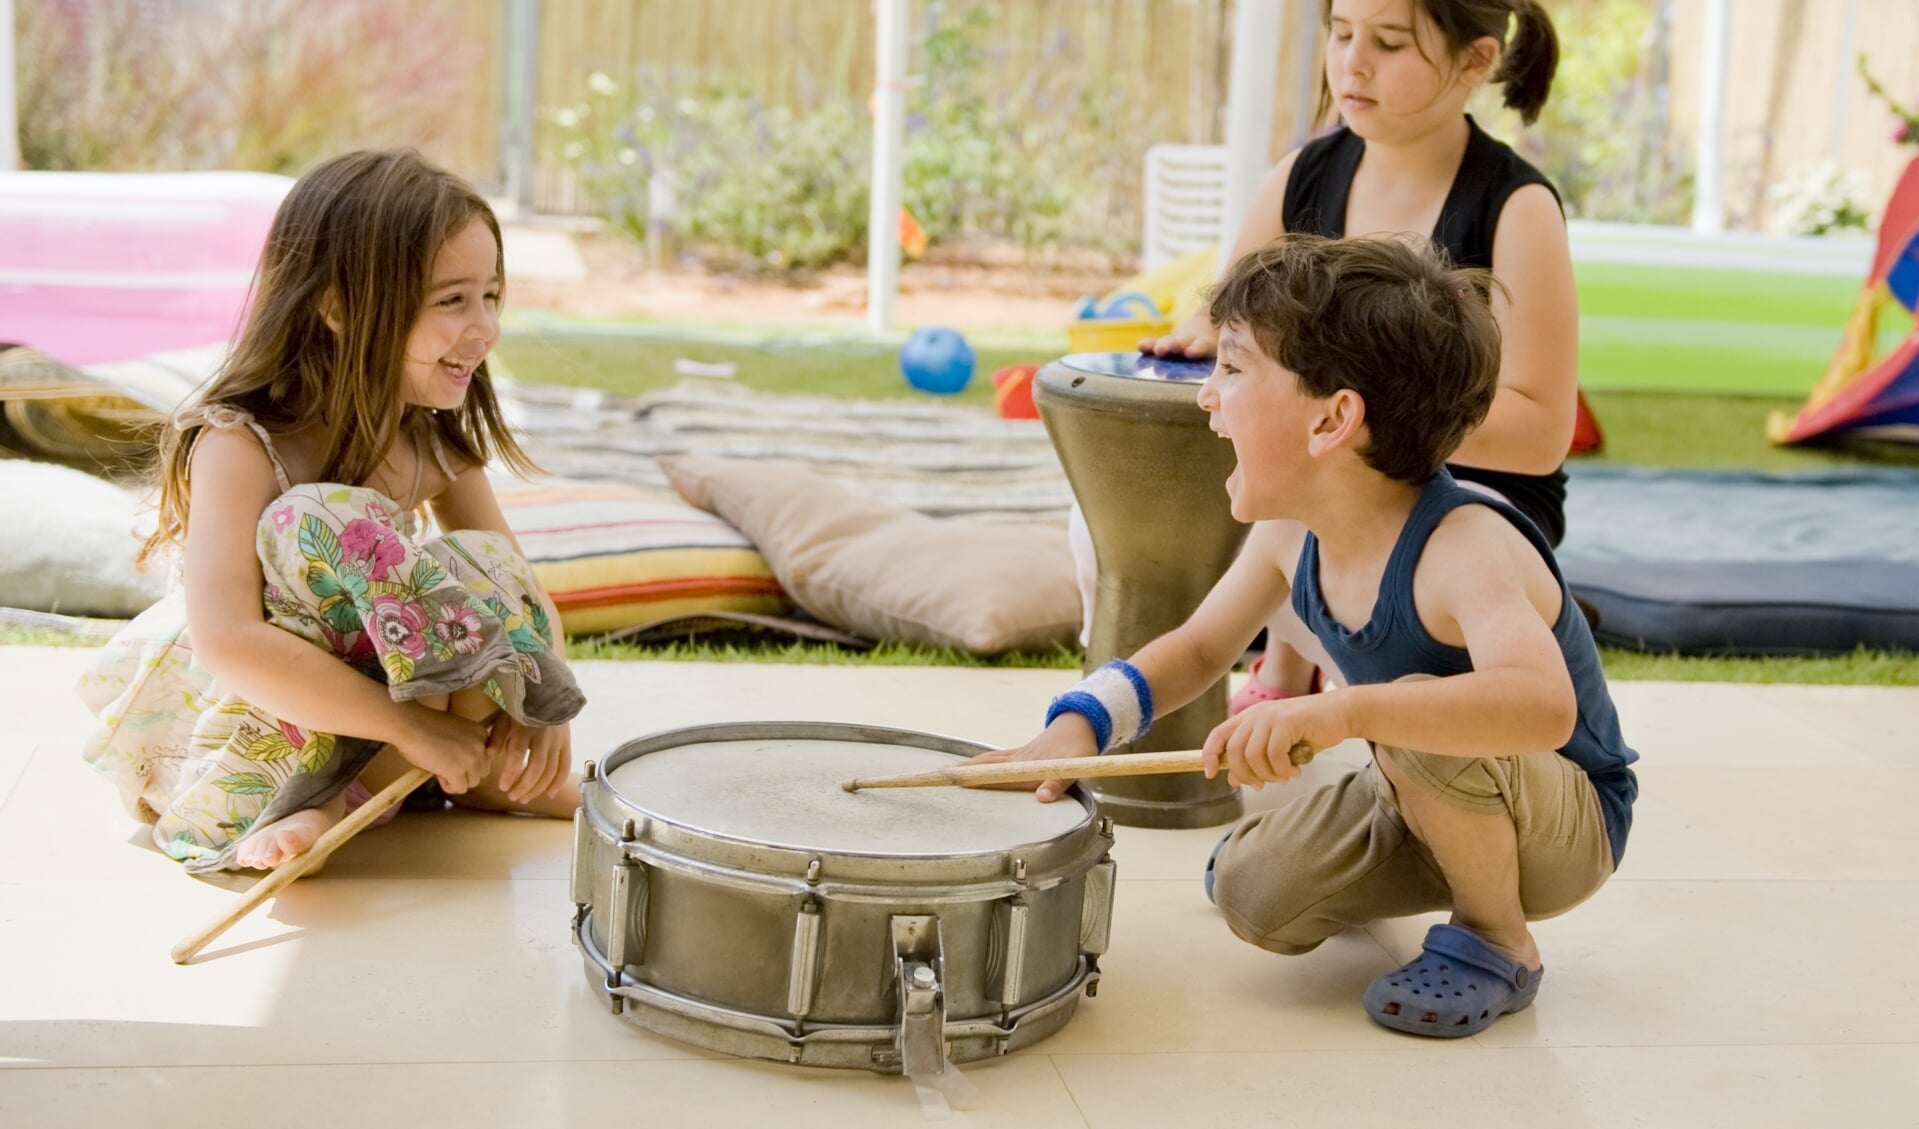 three kids in the backyard having fun with drums.